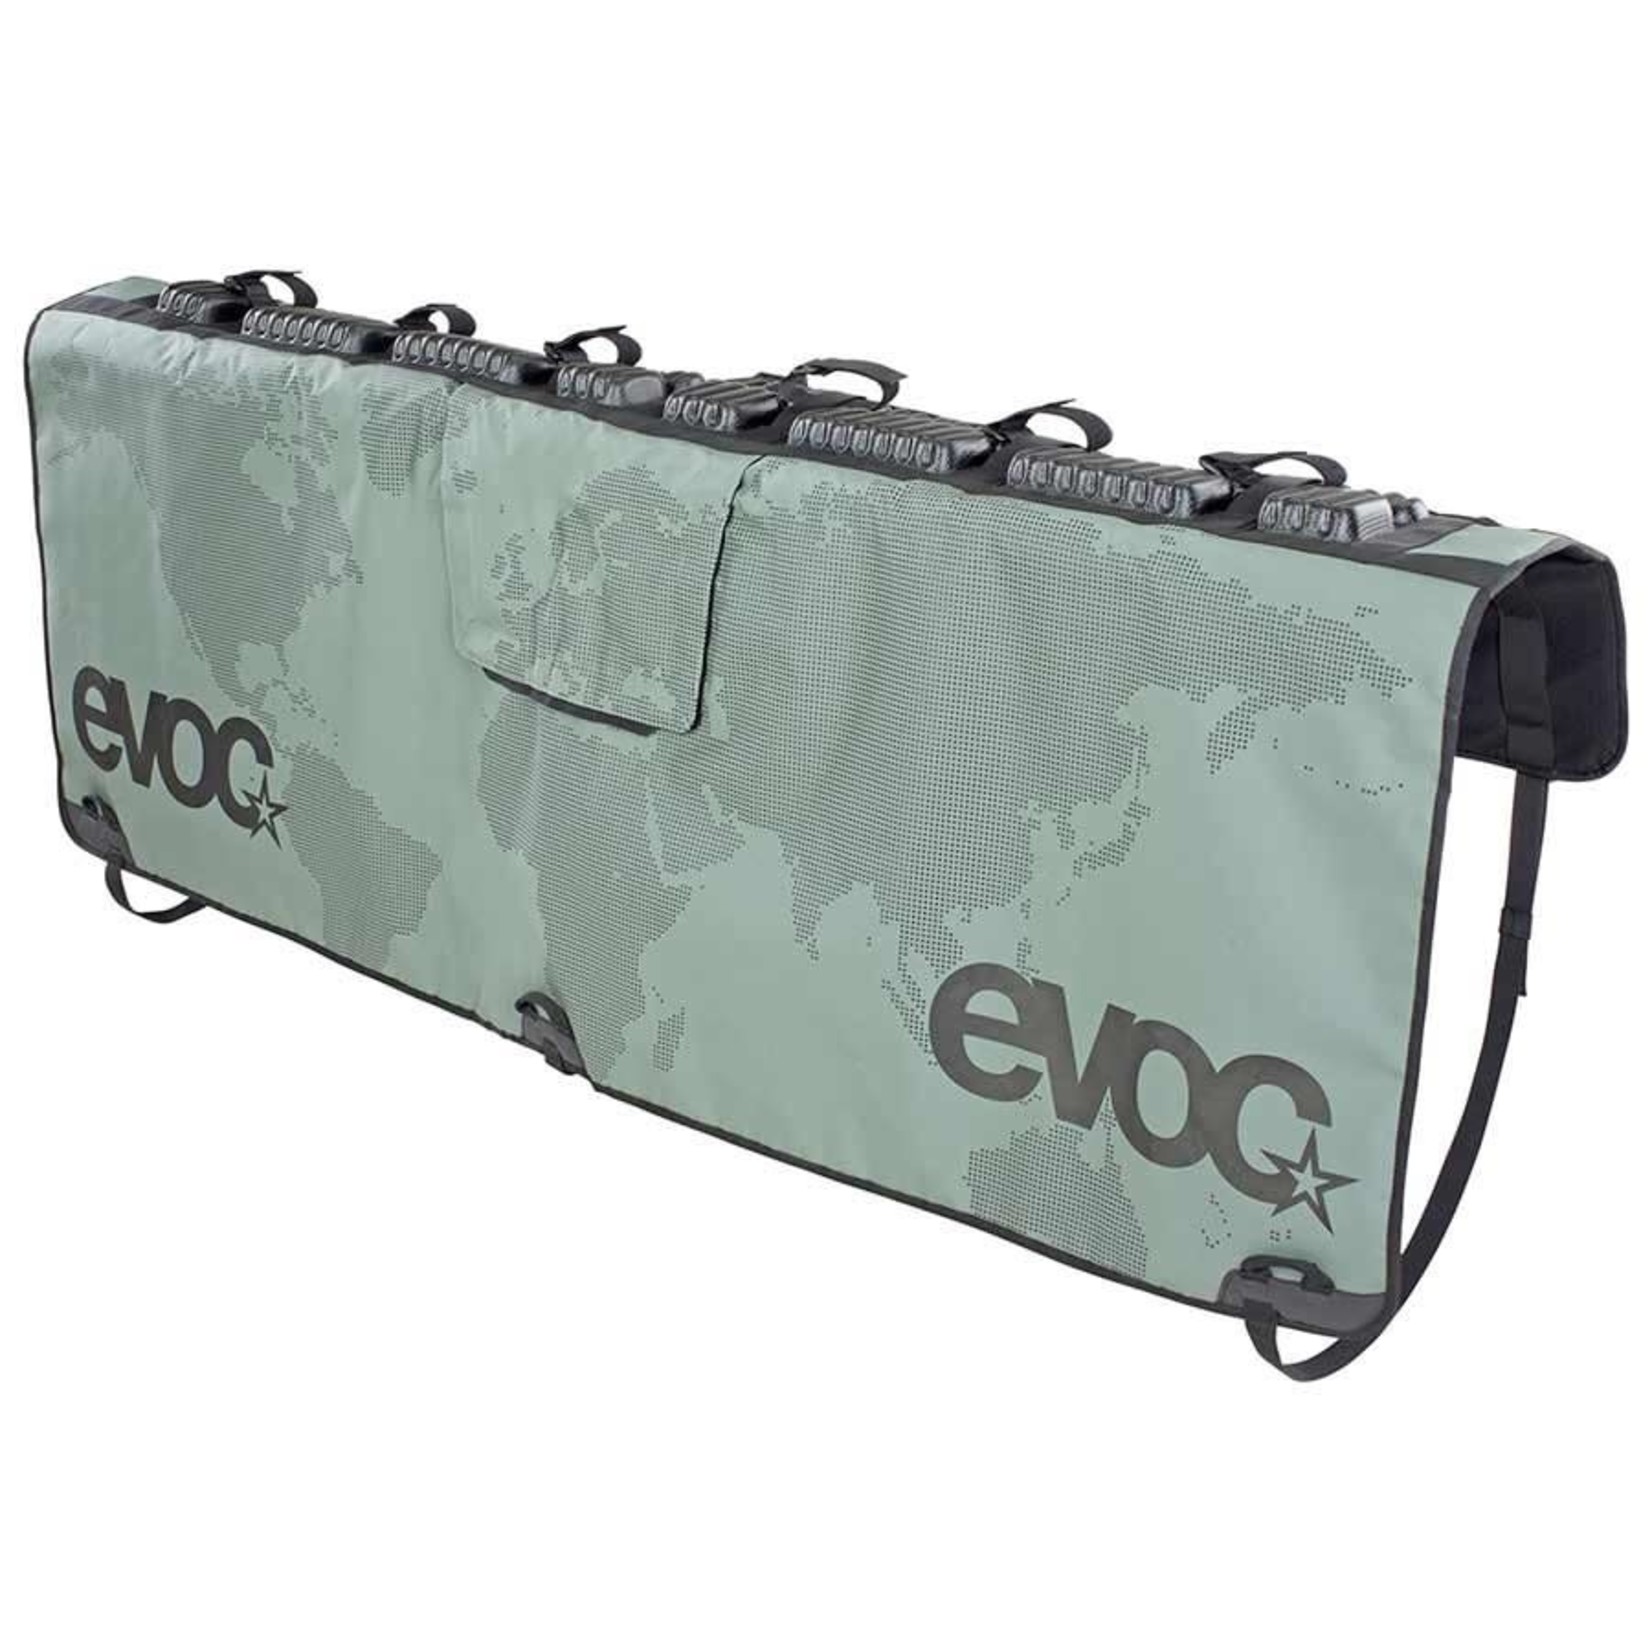 Evoc EVOC, Tailgate Pad, 136cm / 53.5'' wide, for mid-sized trucks, Olive